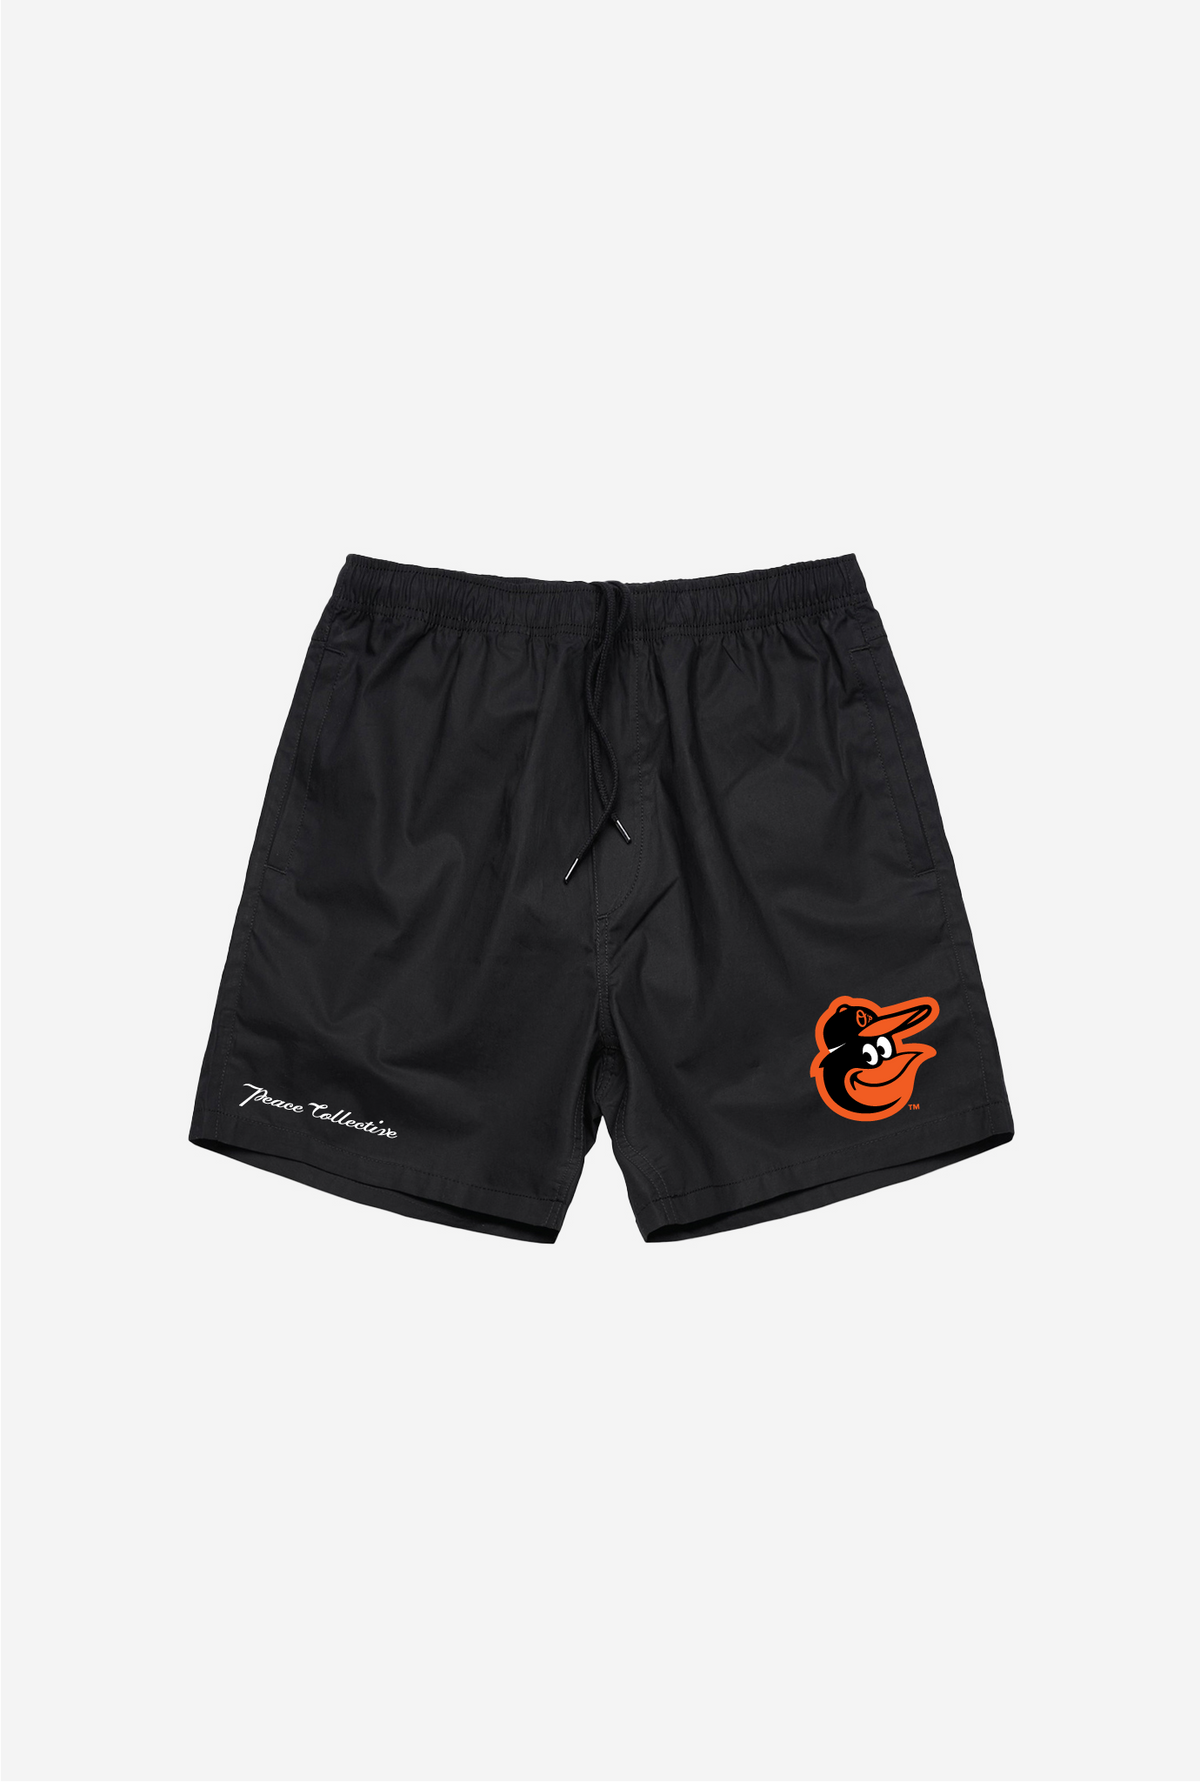 Baltimore Orioles Board Shorts - Black